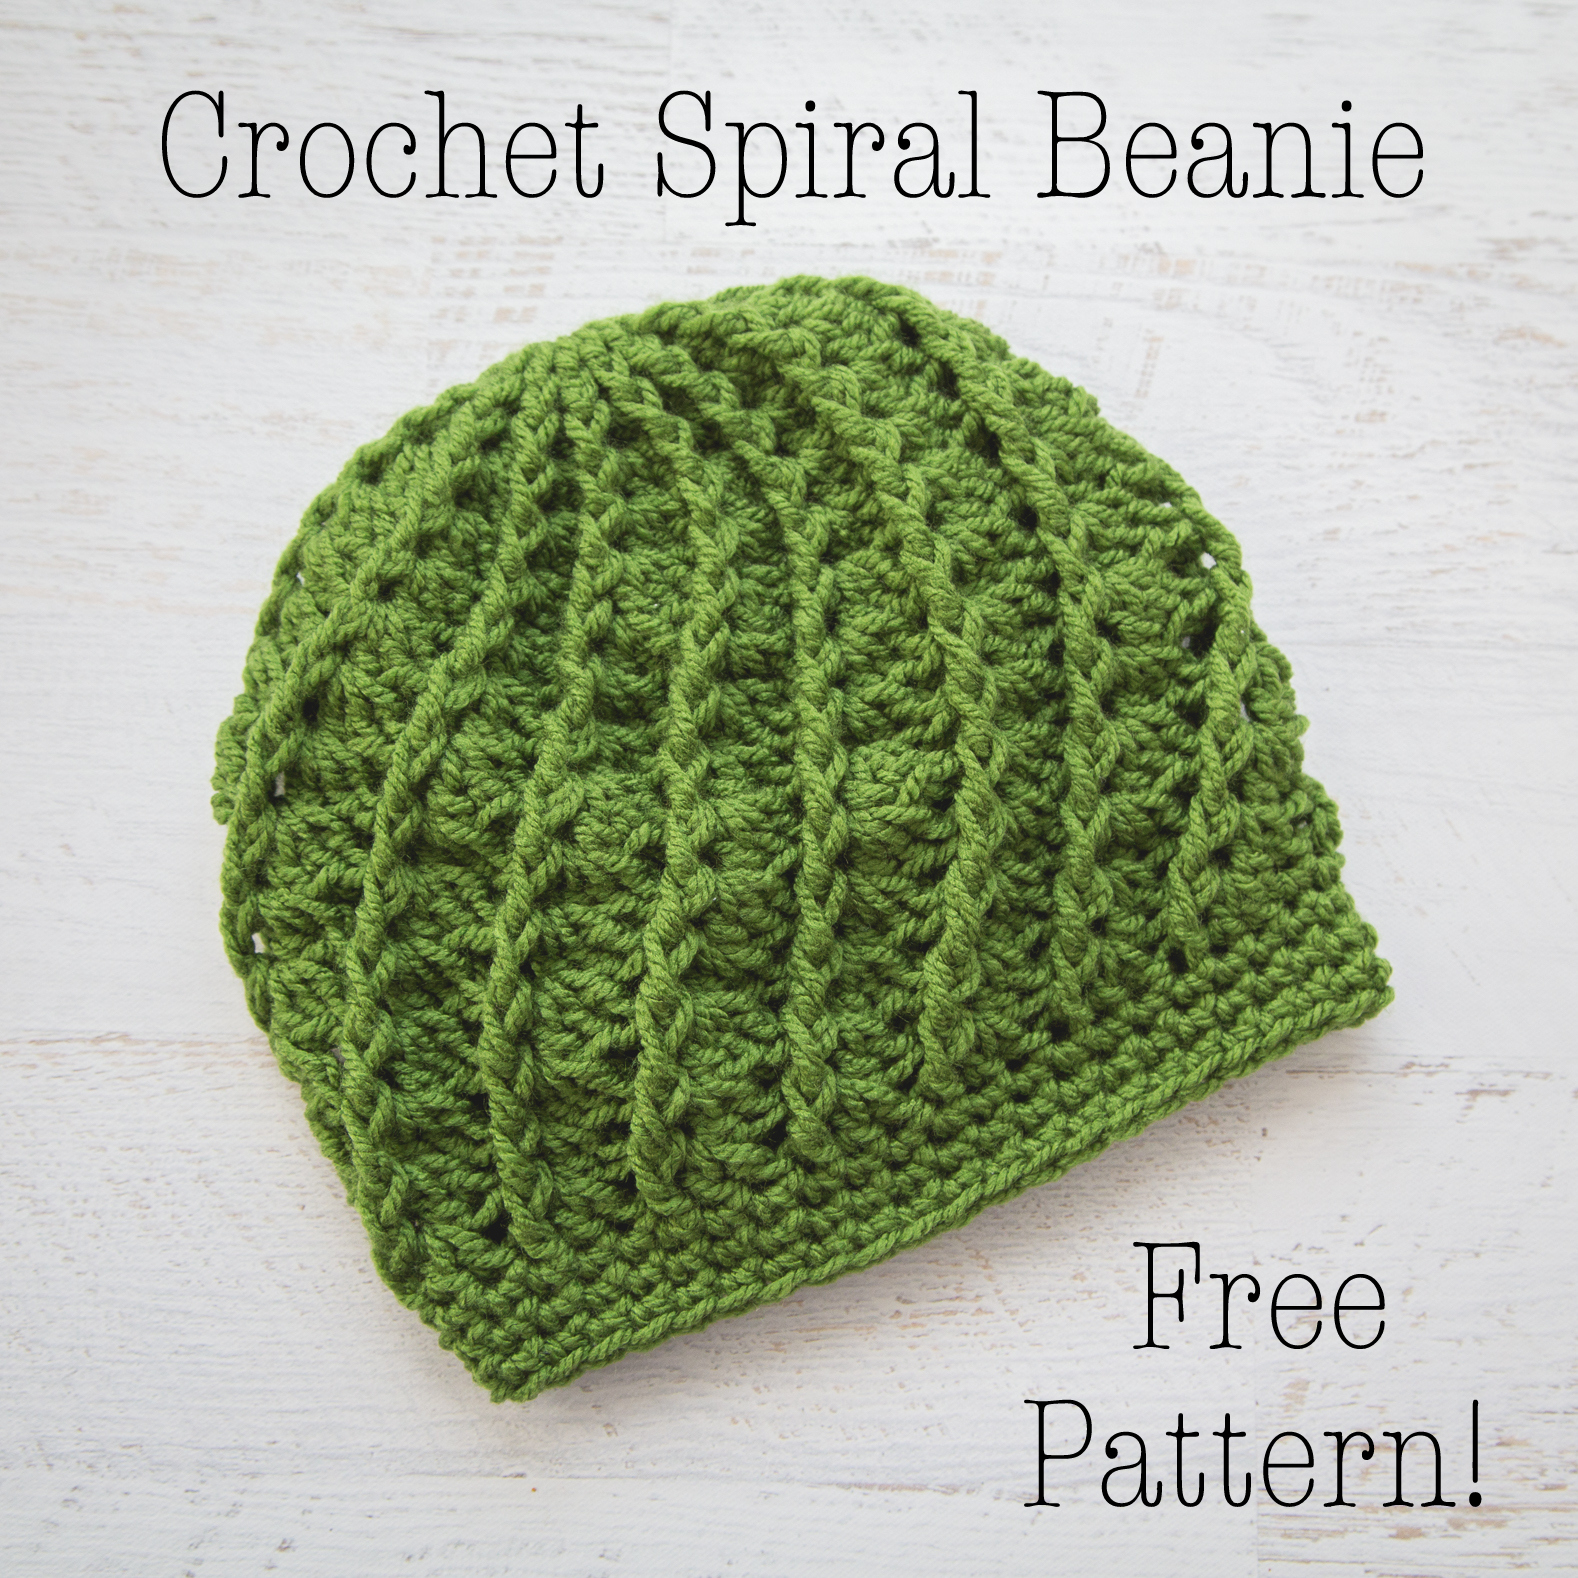 Free Hat Crochet Patterns Crochet Spiral Beanie Free Crochet Pattern Loganberry Handmade